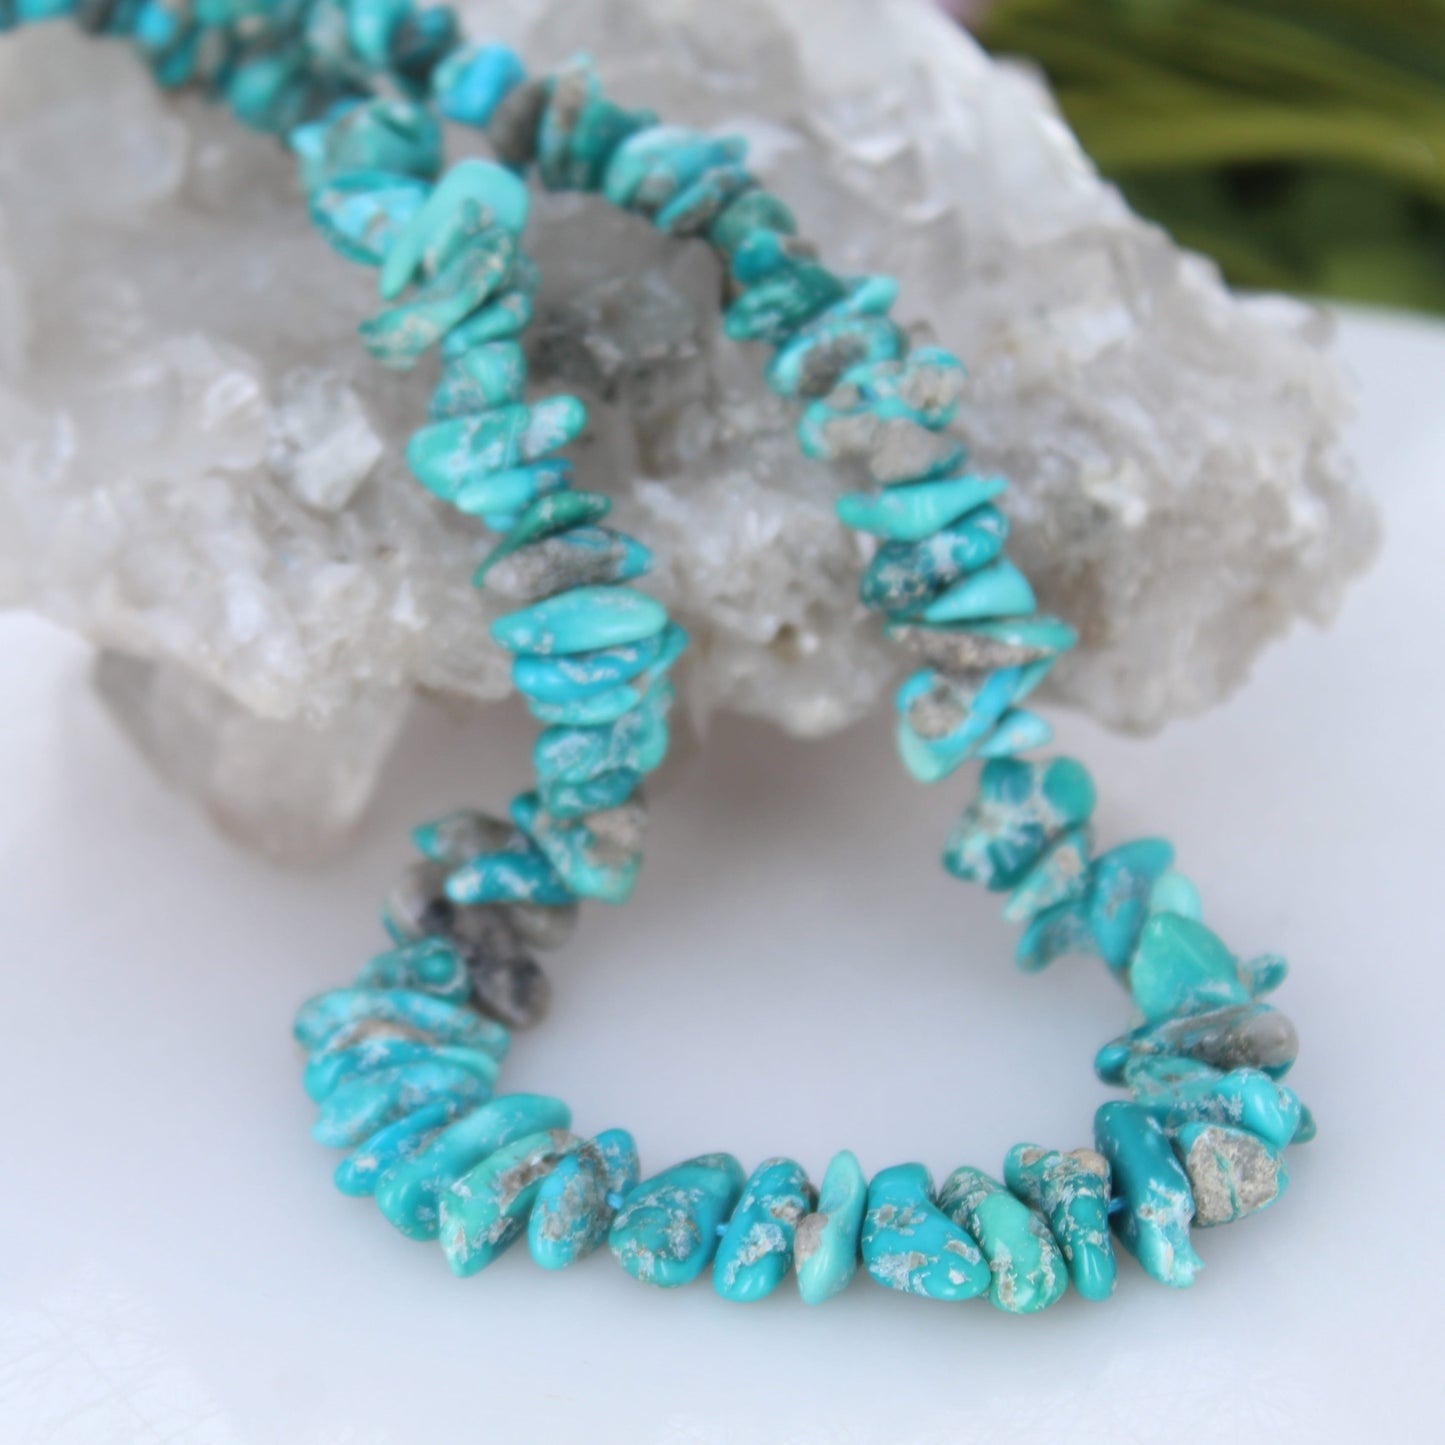 Sleeping Beauty Turquoise Beads Deep Teal Blue 7-18m Flat Nuggets